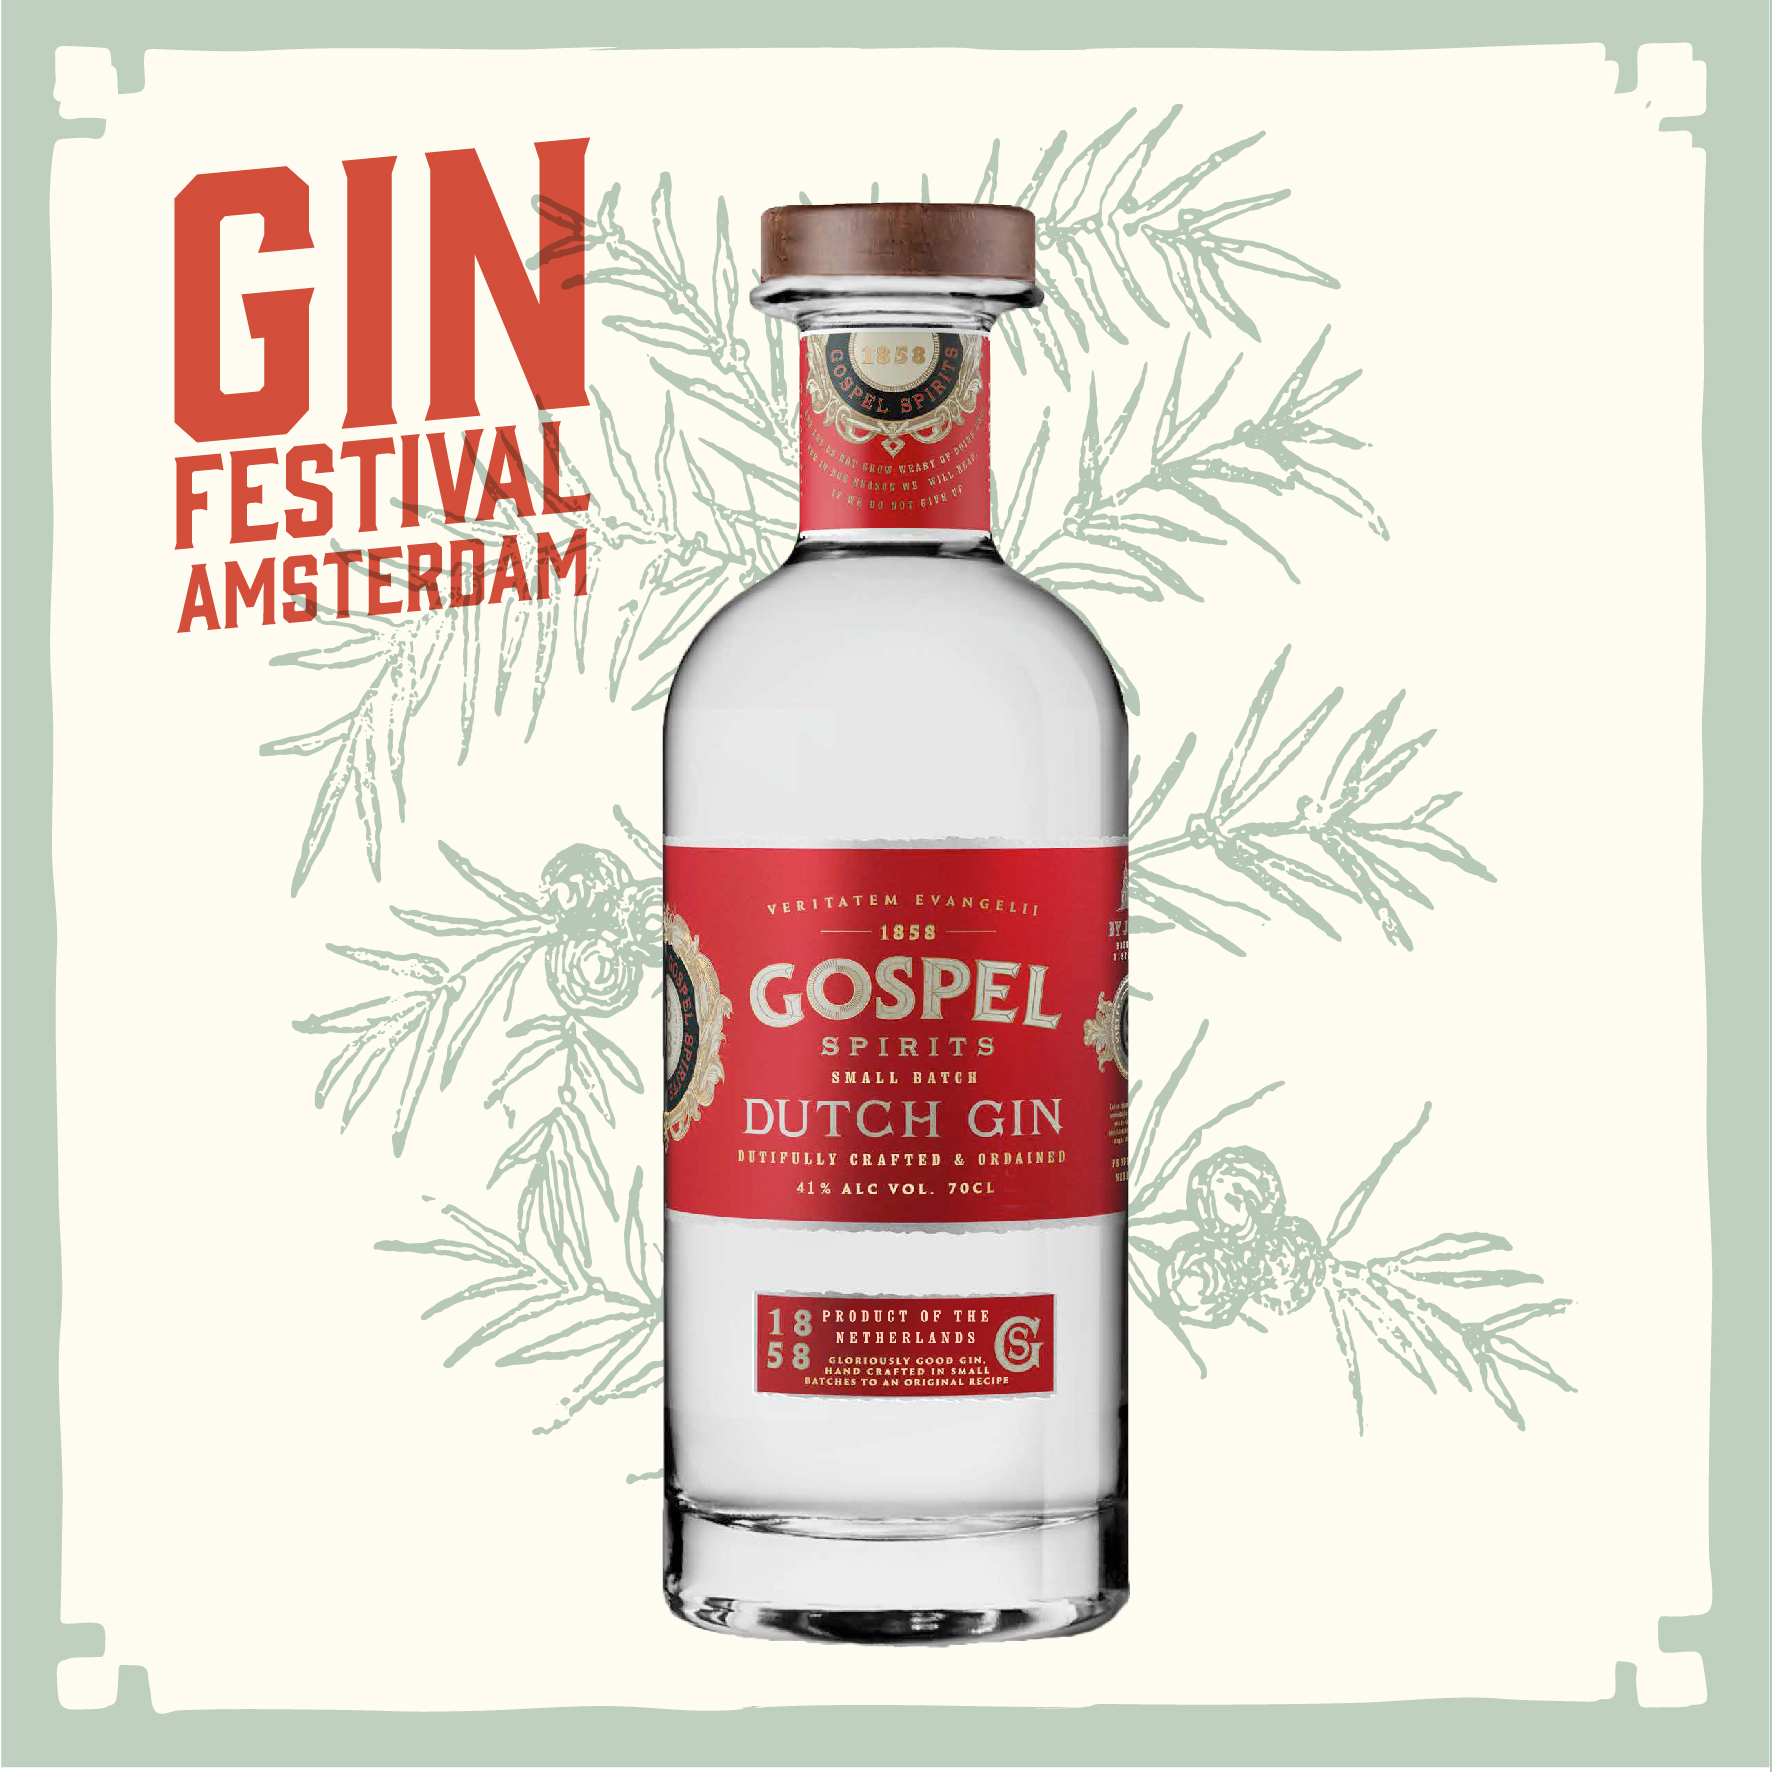 Gospel Spirits Dutch Gin